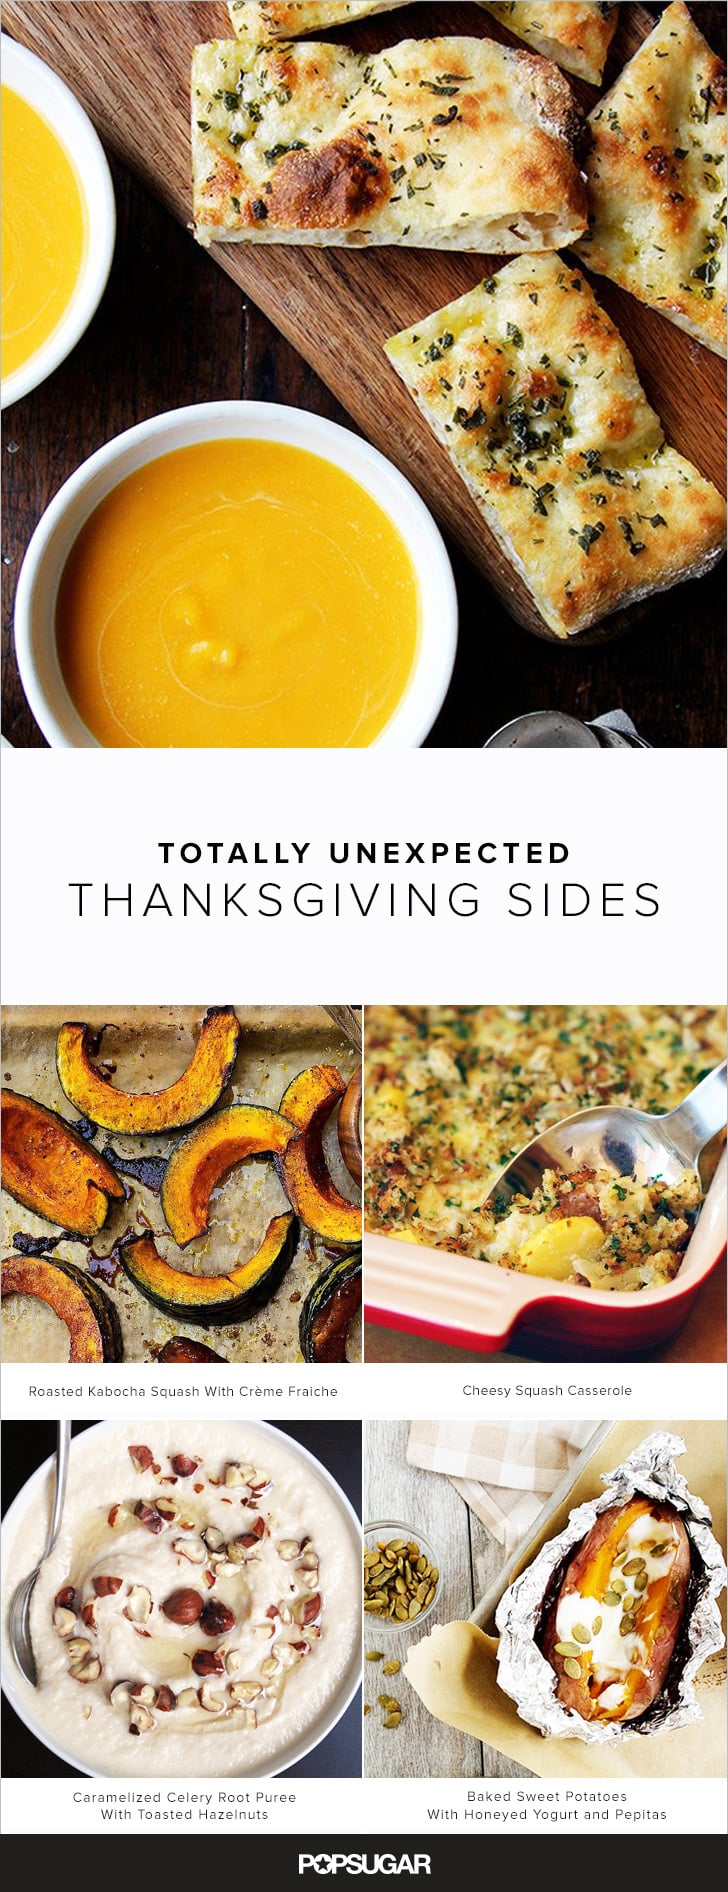 Unique Thanksgiving Side Dishes | POPSUGAR Food